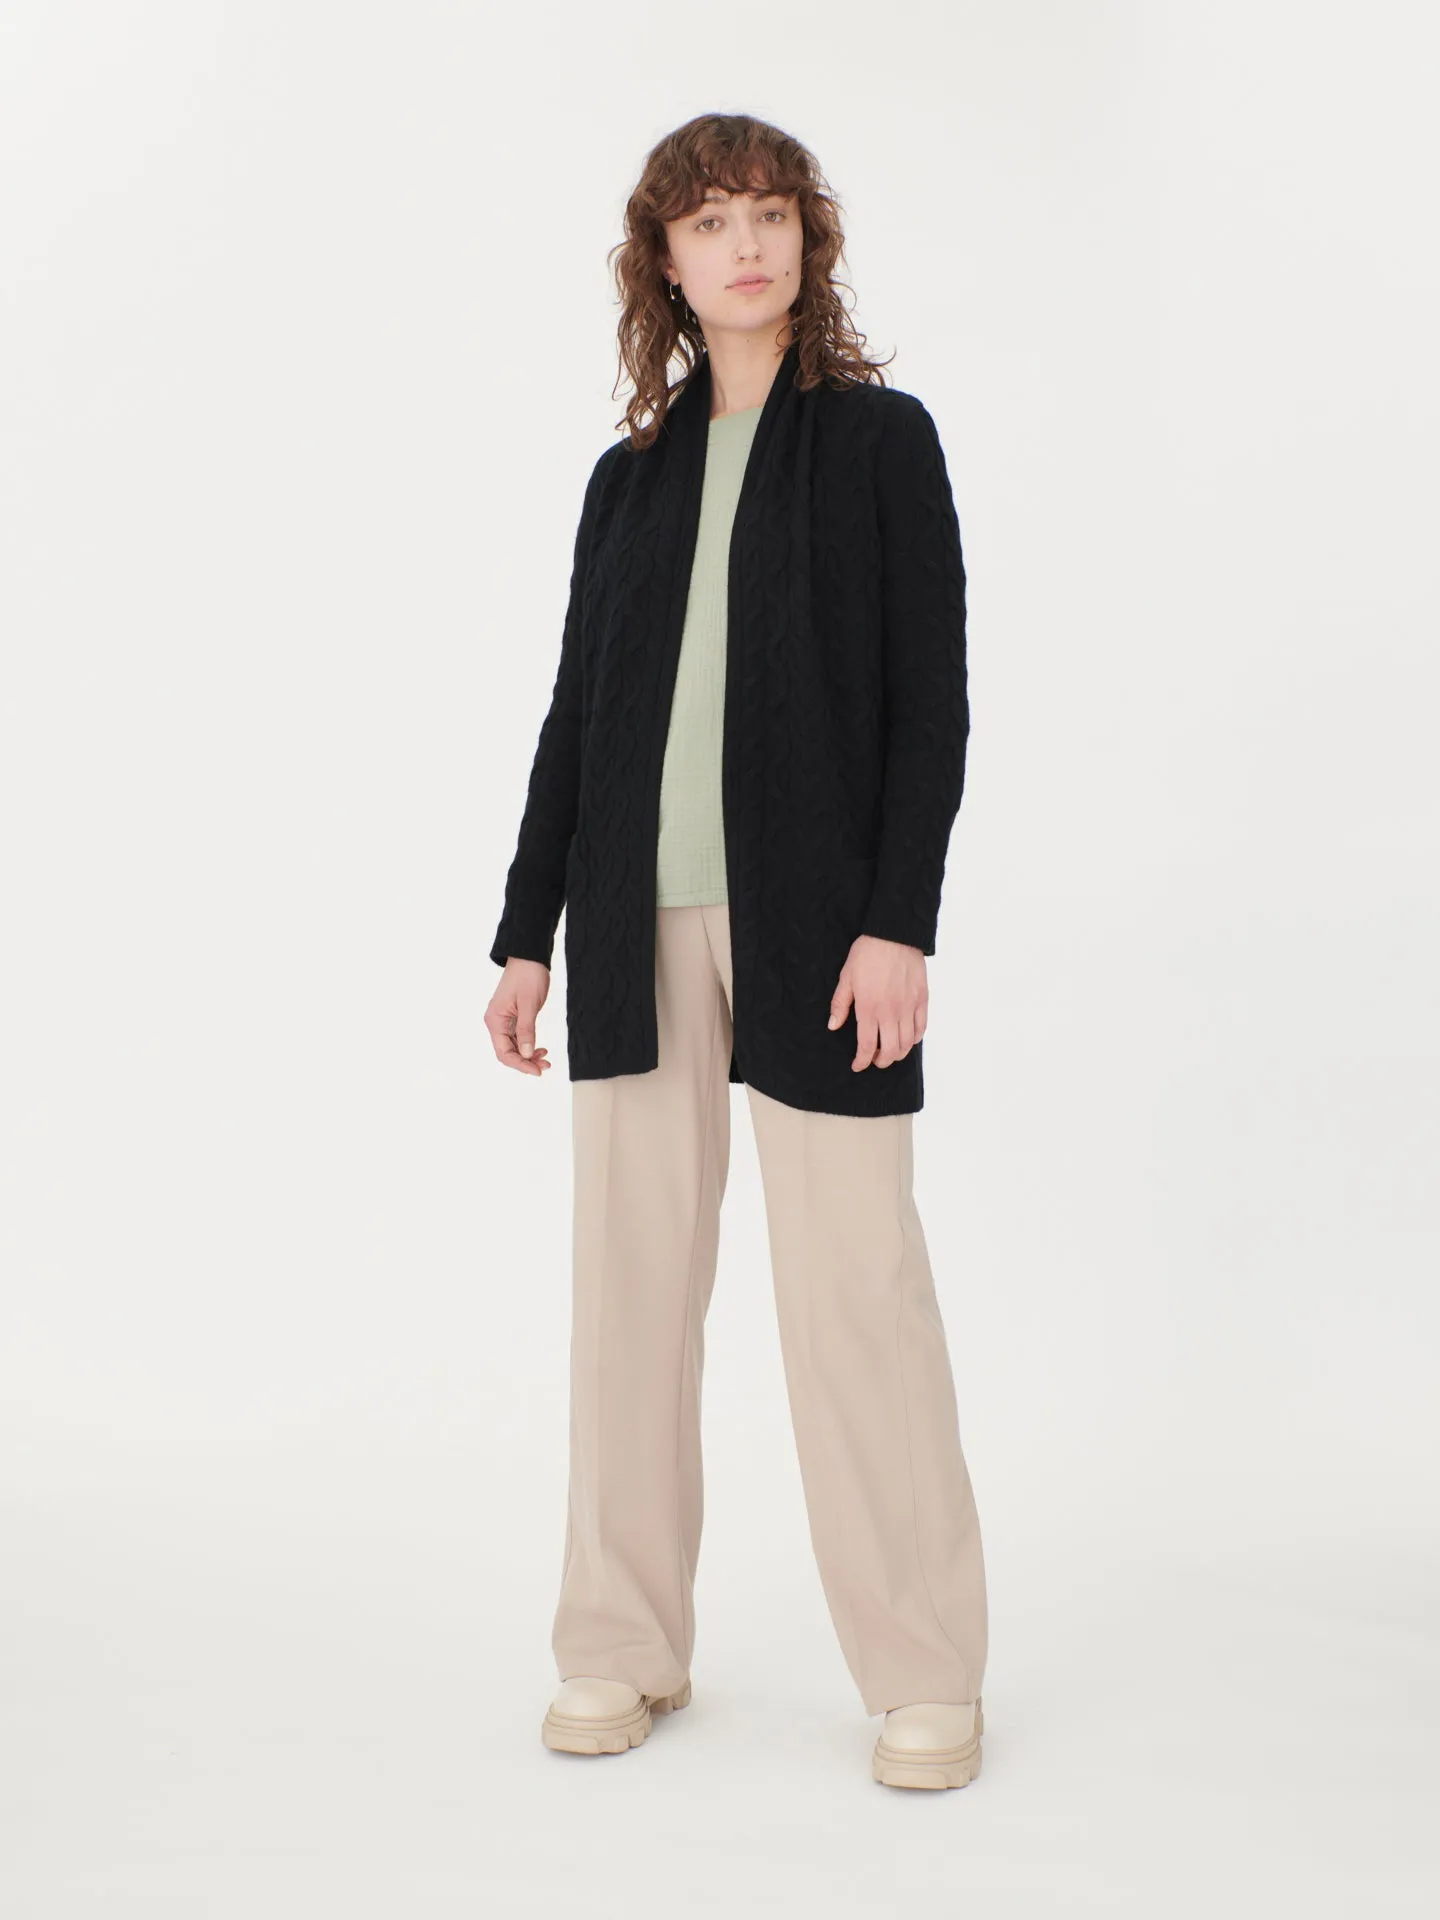 Women's Cashmere Cable Cardigan Black - Gobi Cashmere